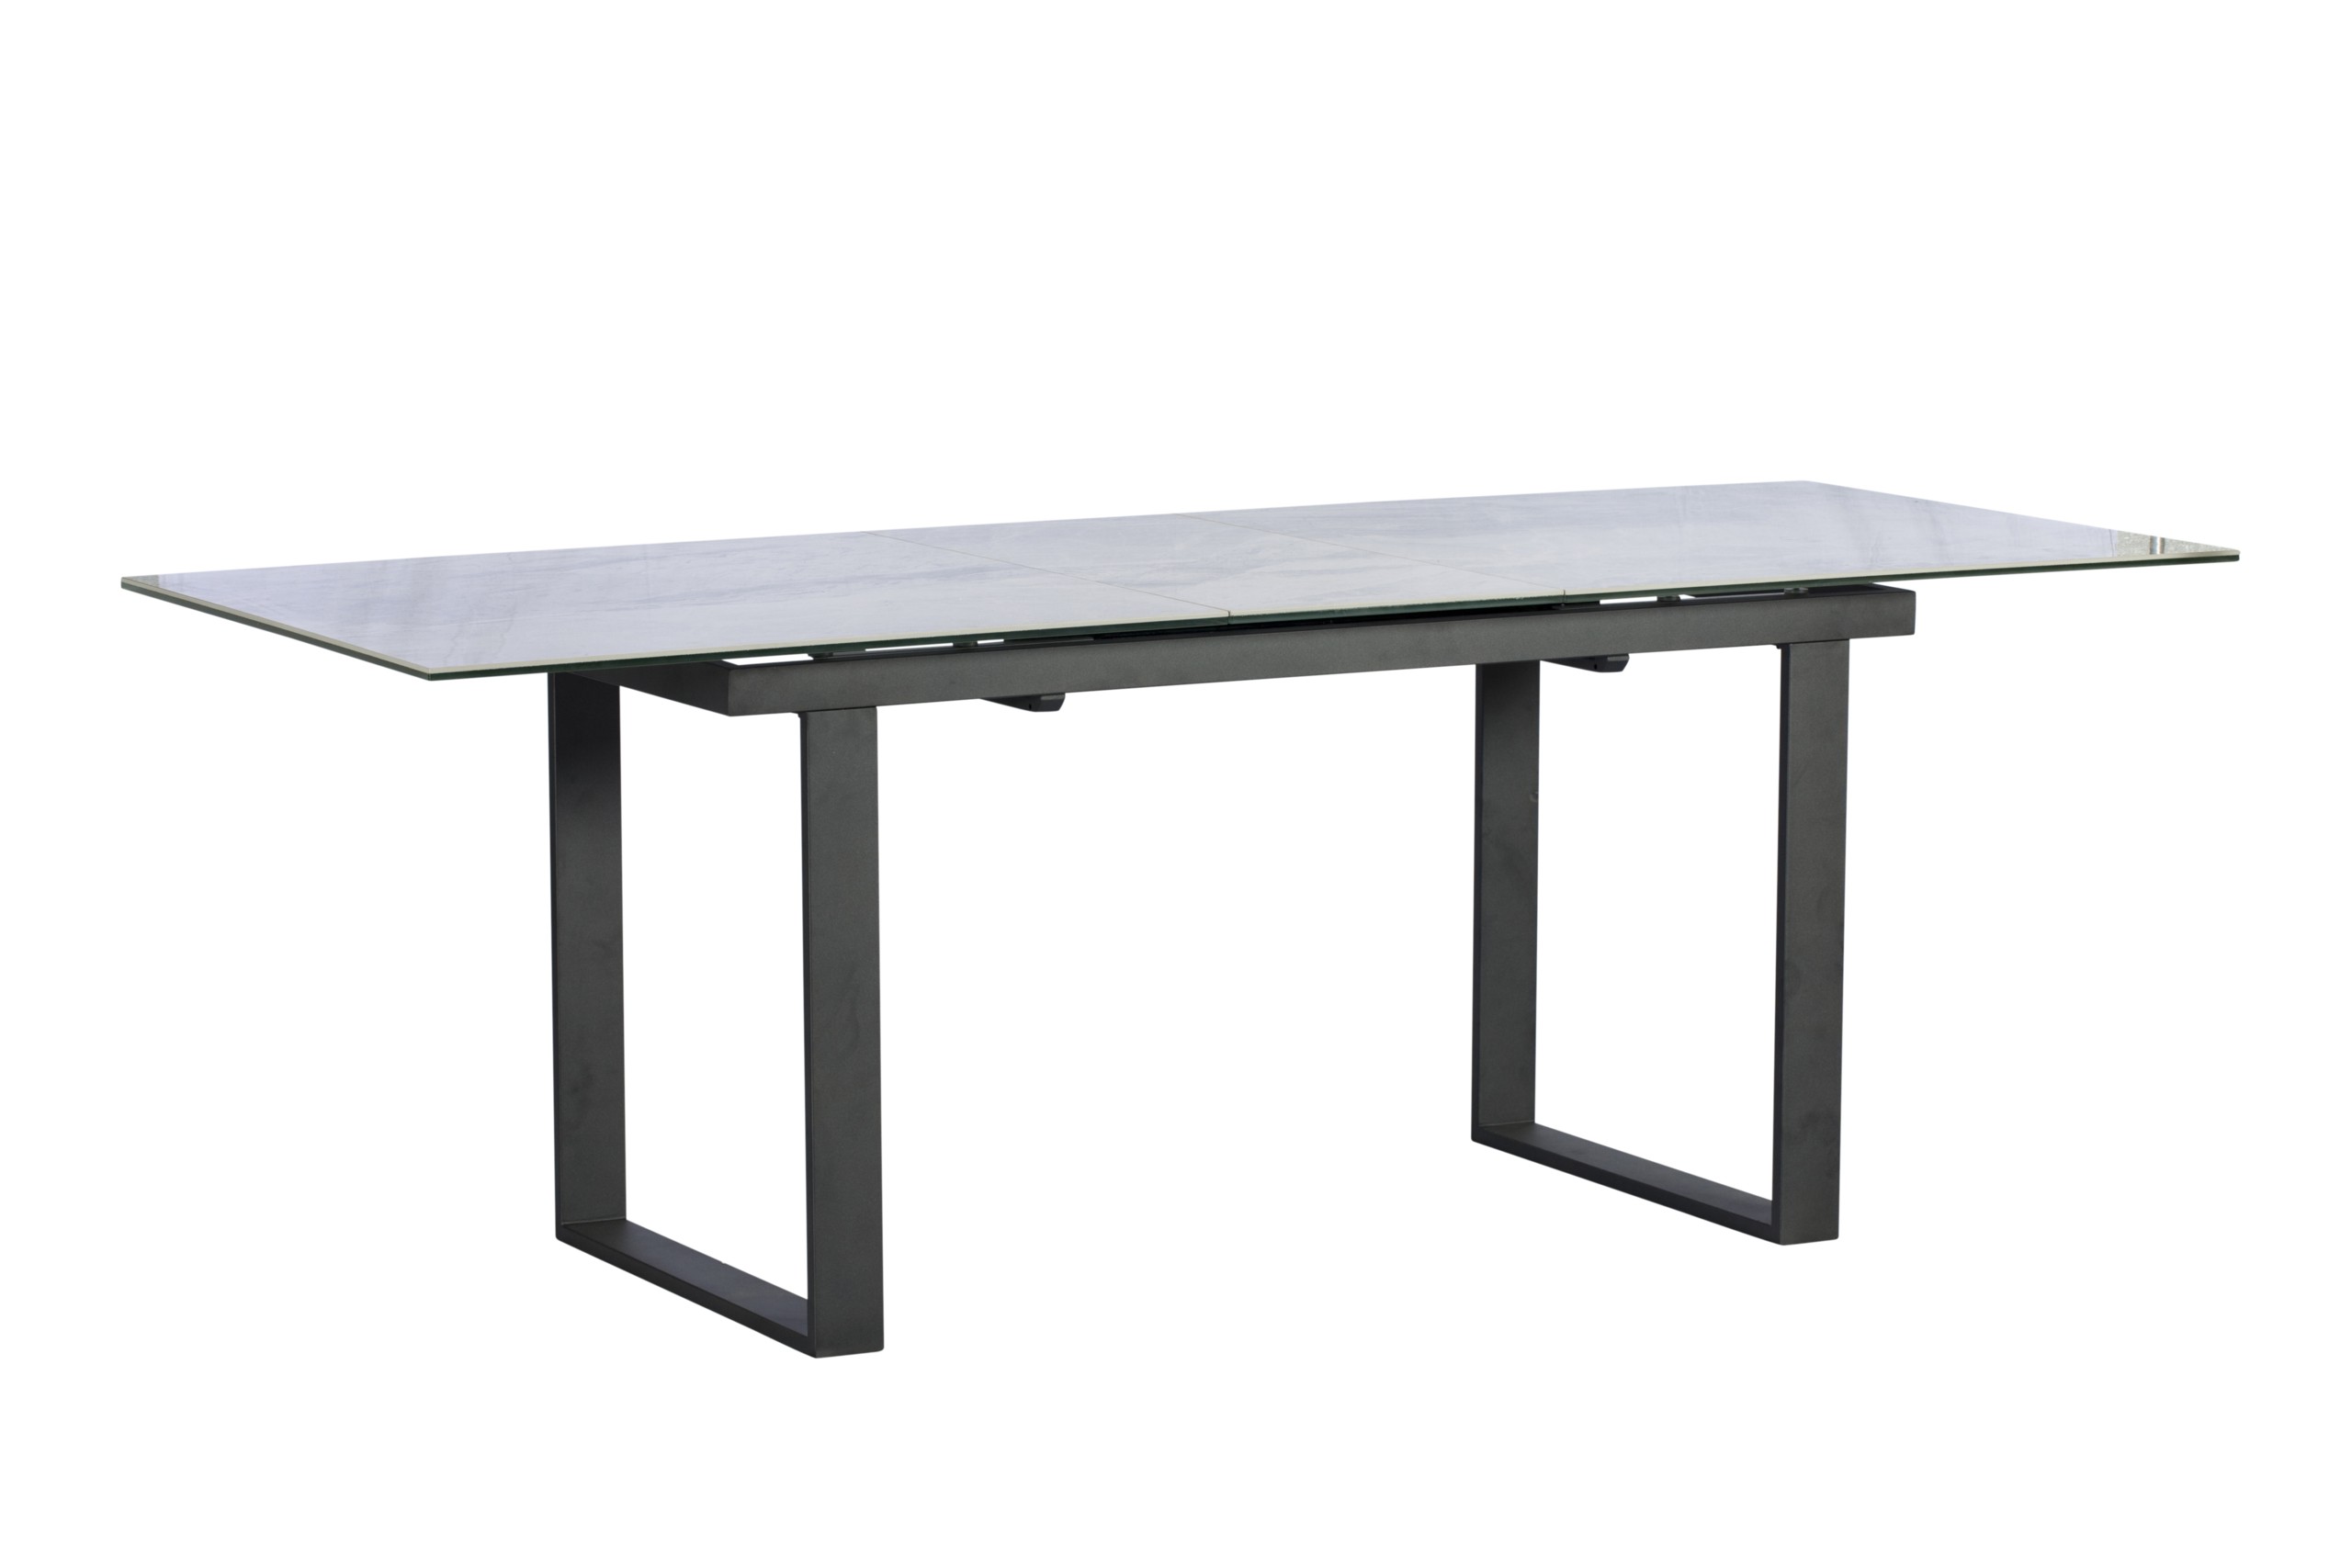 Stanley furniture archipelago calypso rectangular pedestal table